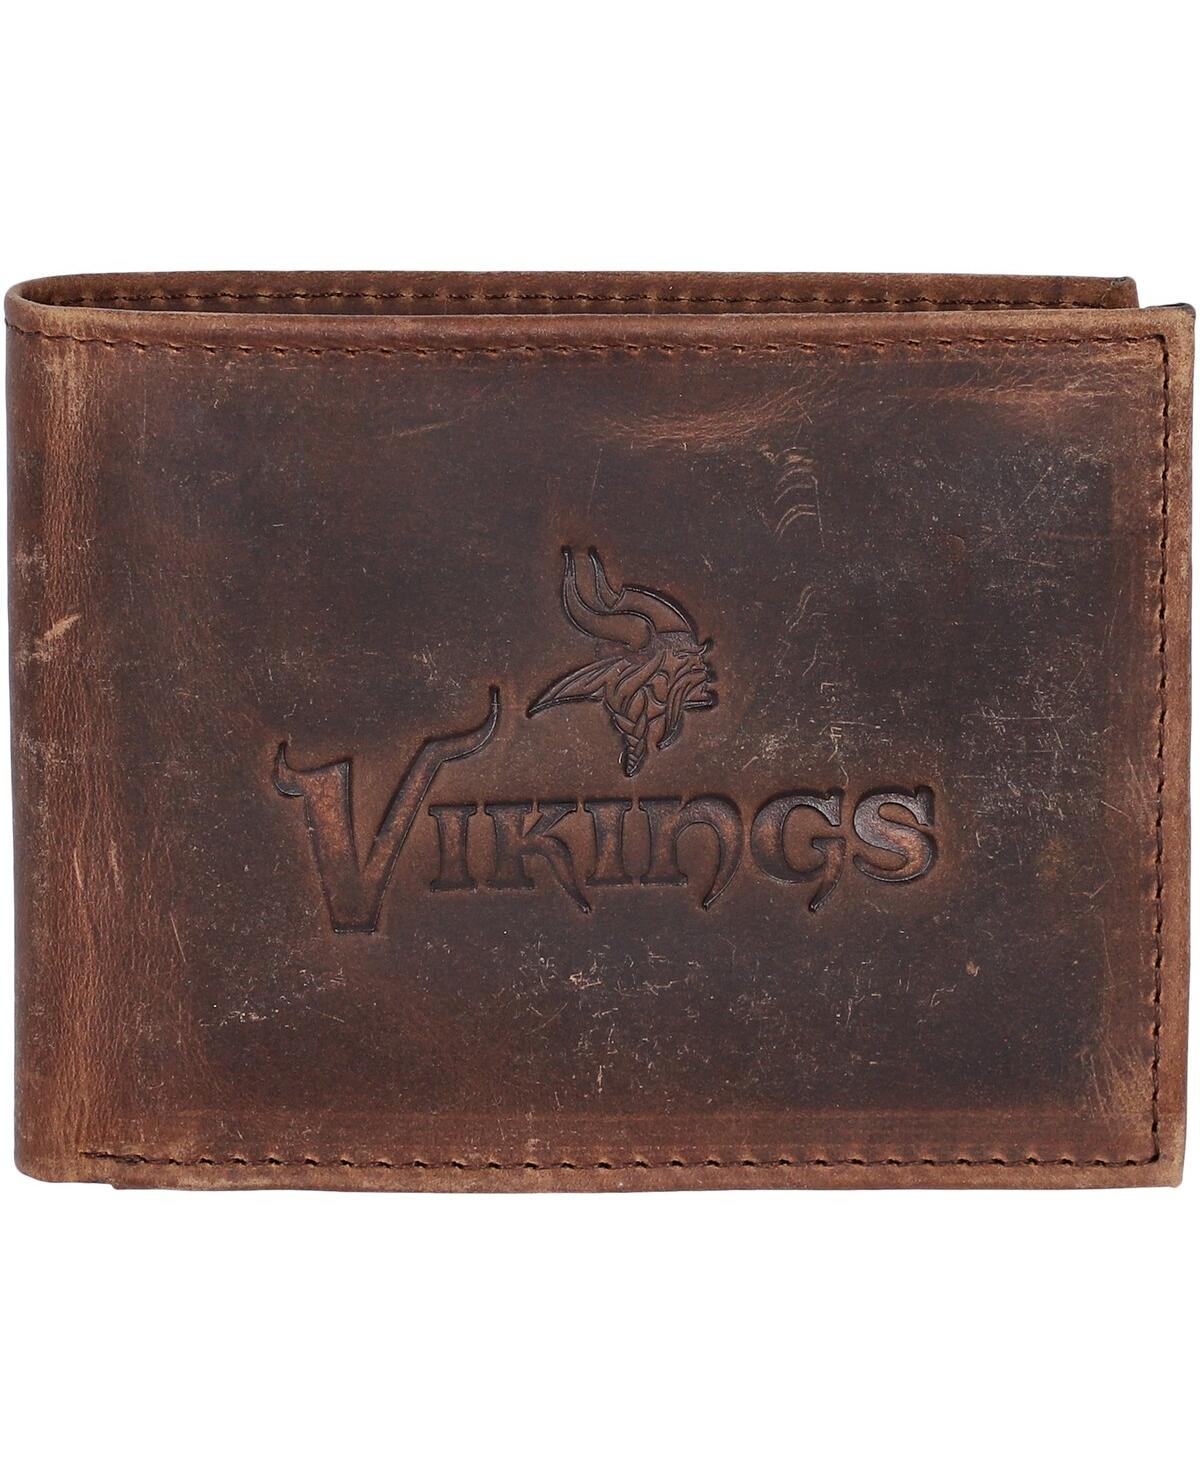 Evergreen Enterprises Men's Brown Minnesota Vikings Bifold Leather Wallet